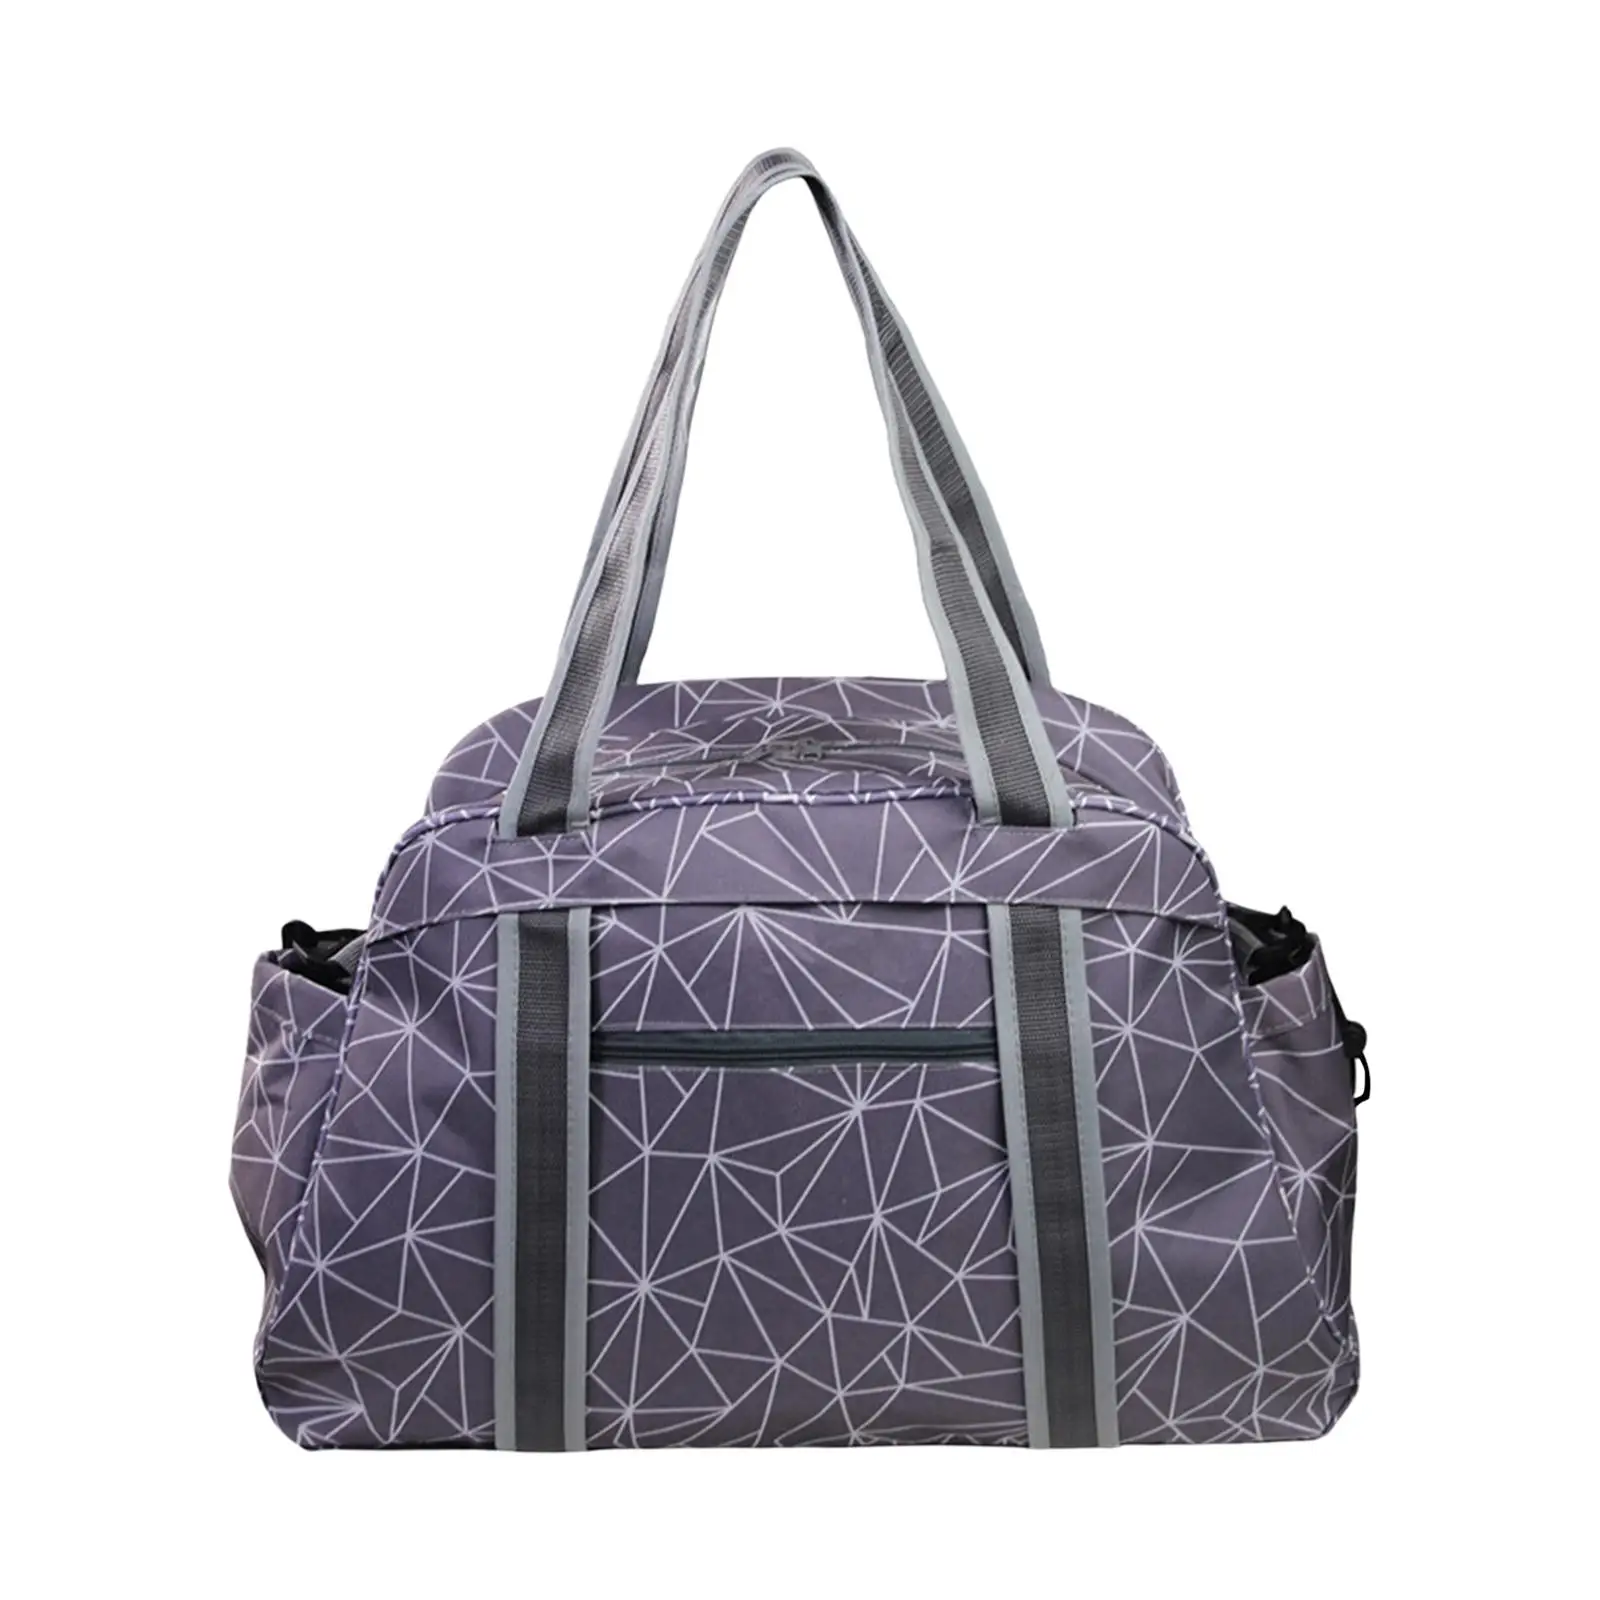 Portable Sports Gym Bag Weekender Bag Carry On Tear Resistant Yoga Mat Holder Large Capacity Travel Duffle Bag for Apparel Trip